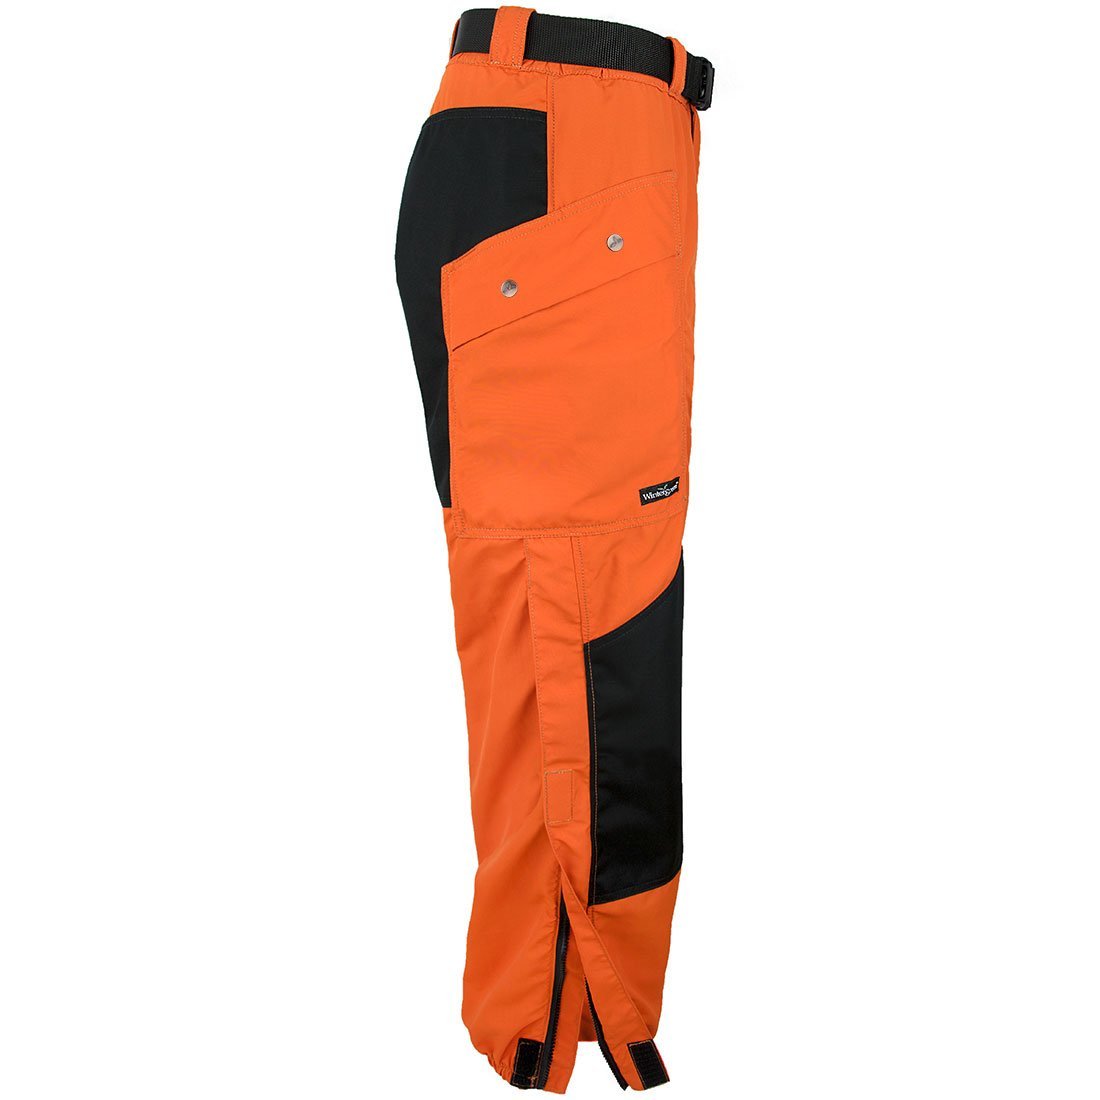 Freedom Two Zipper Pants Charcoal Gray : adaptive pants for men, women